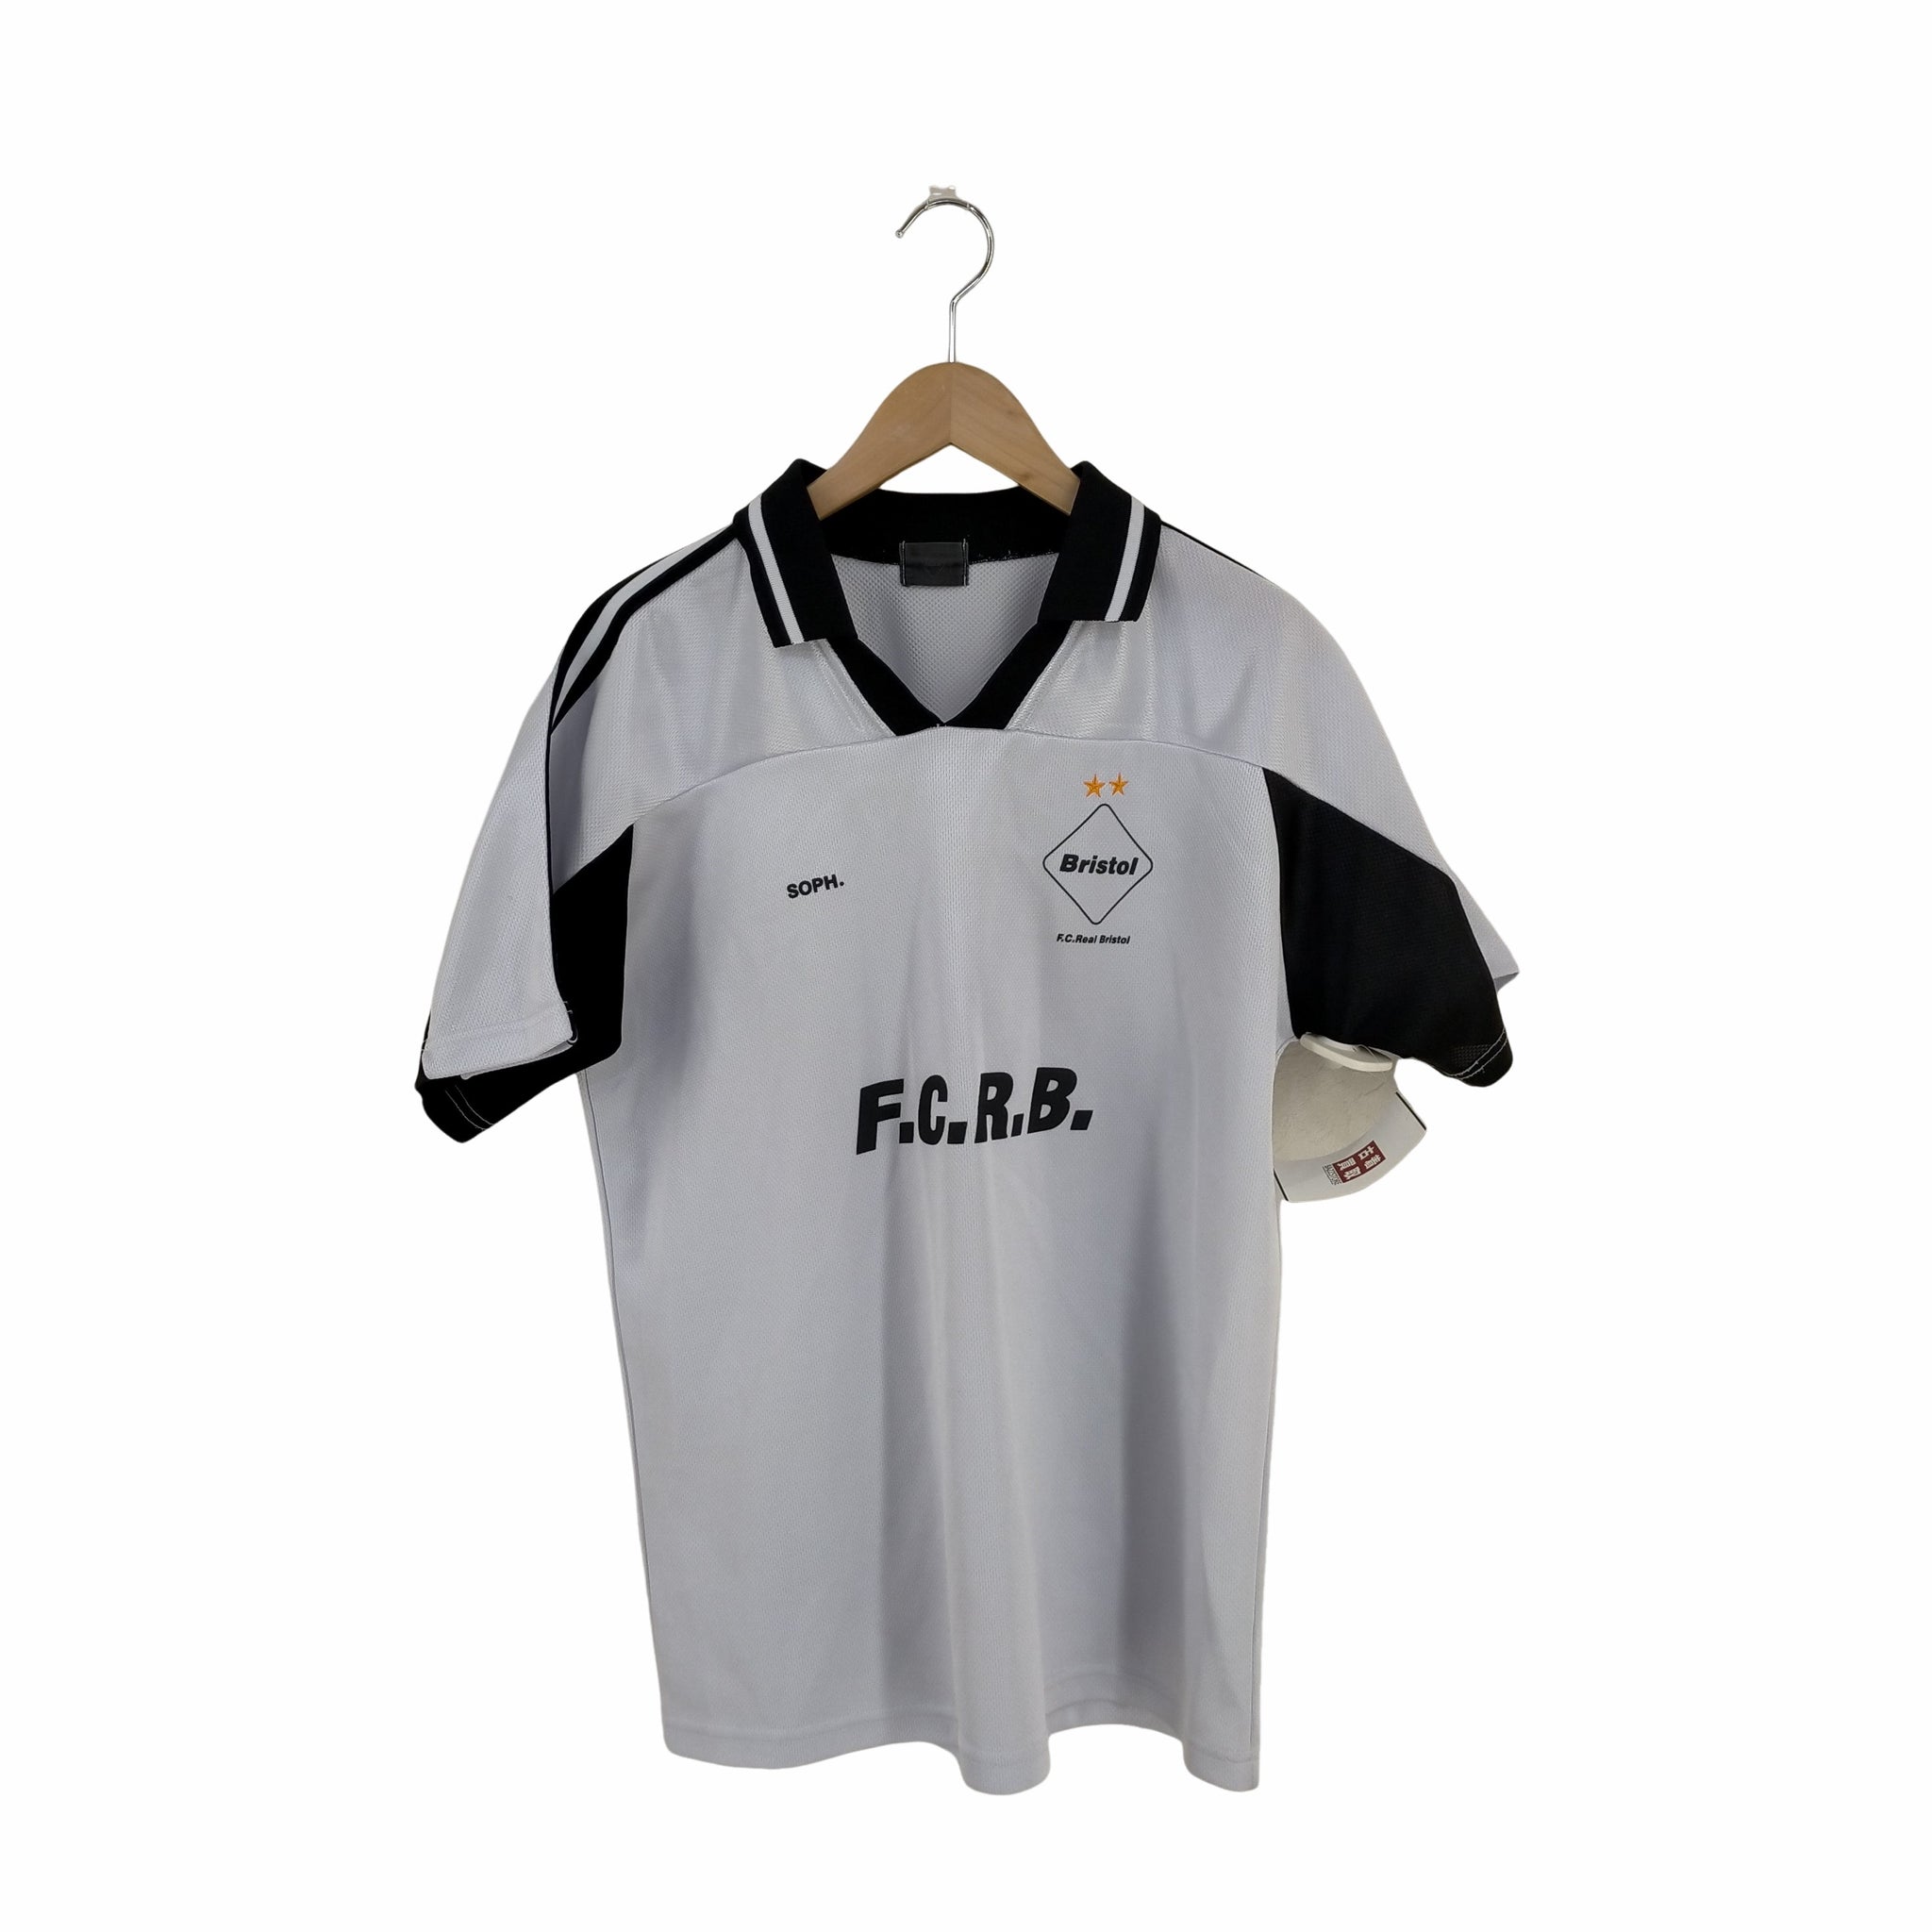 F.C.Real Bristol/ F.C.R.B.(エフシーレアルブリストル / エフシーアールビー)ゲームシャツ